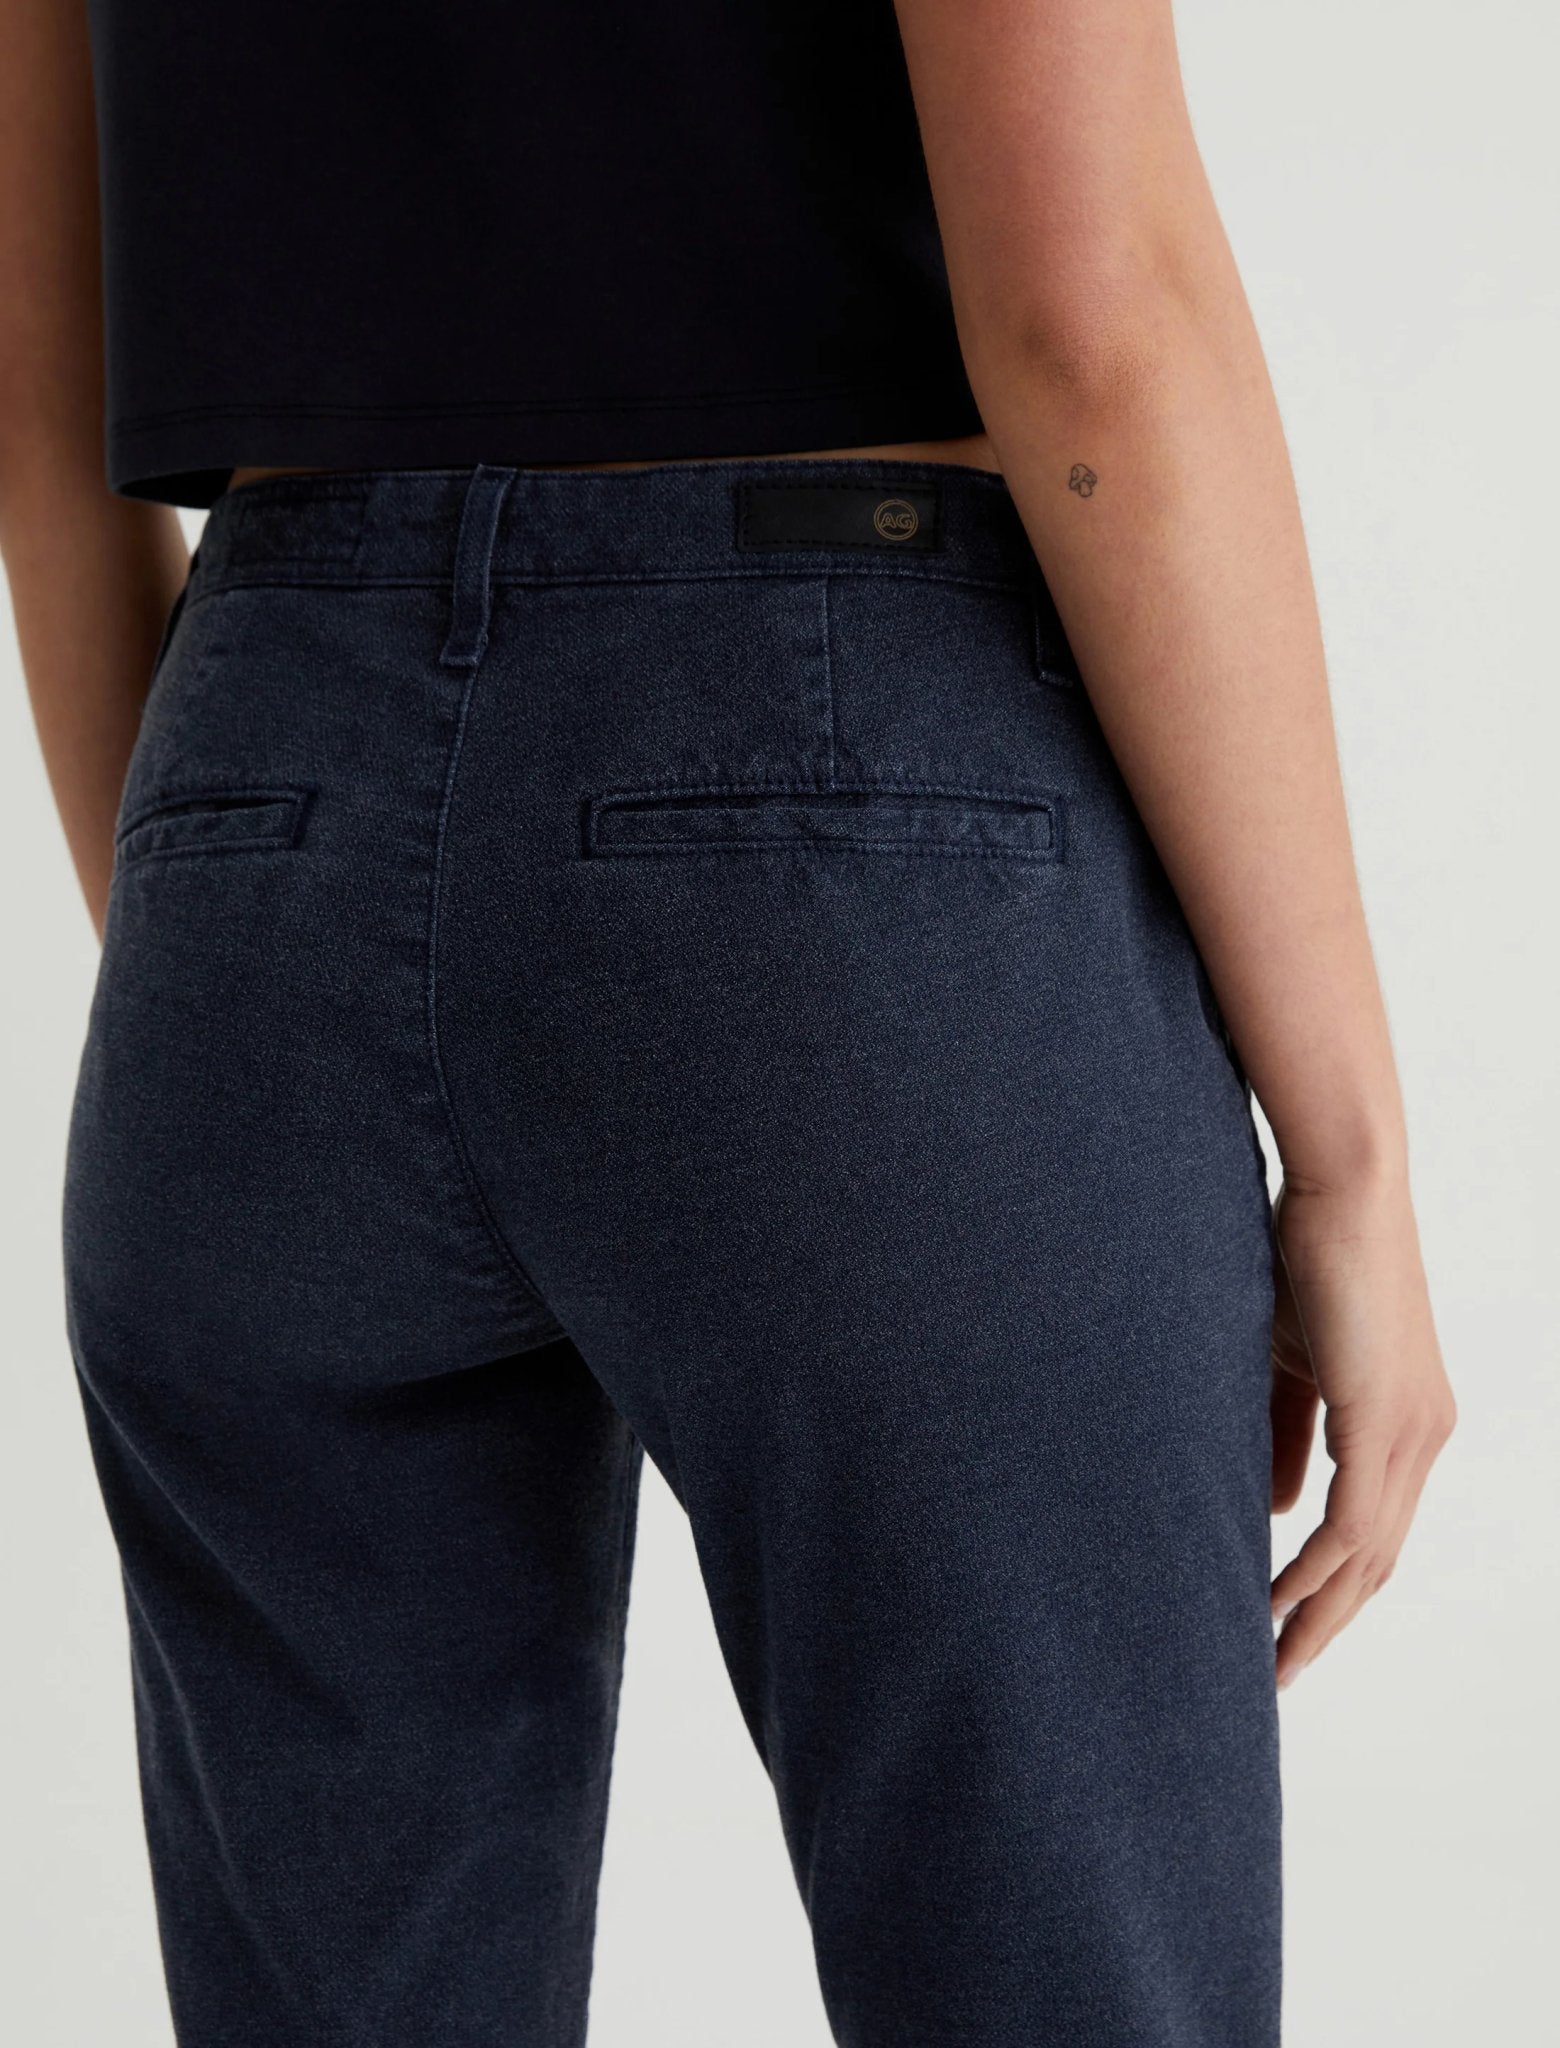 Caden Tailored Trousers - AG Jeans - Danali - SBR1613-BLUN-25